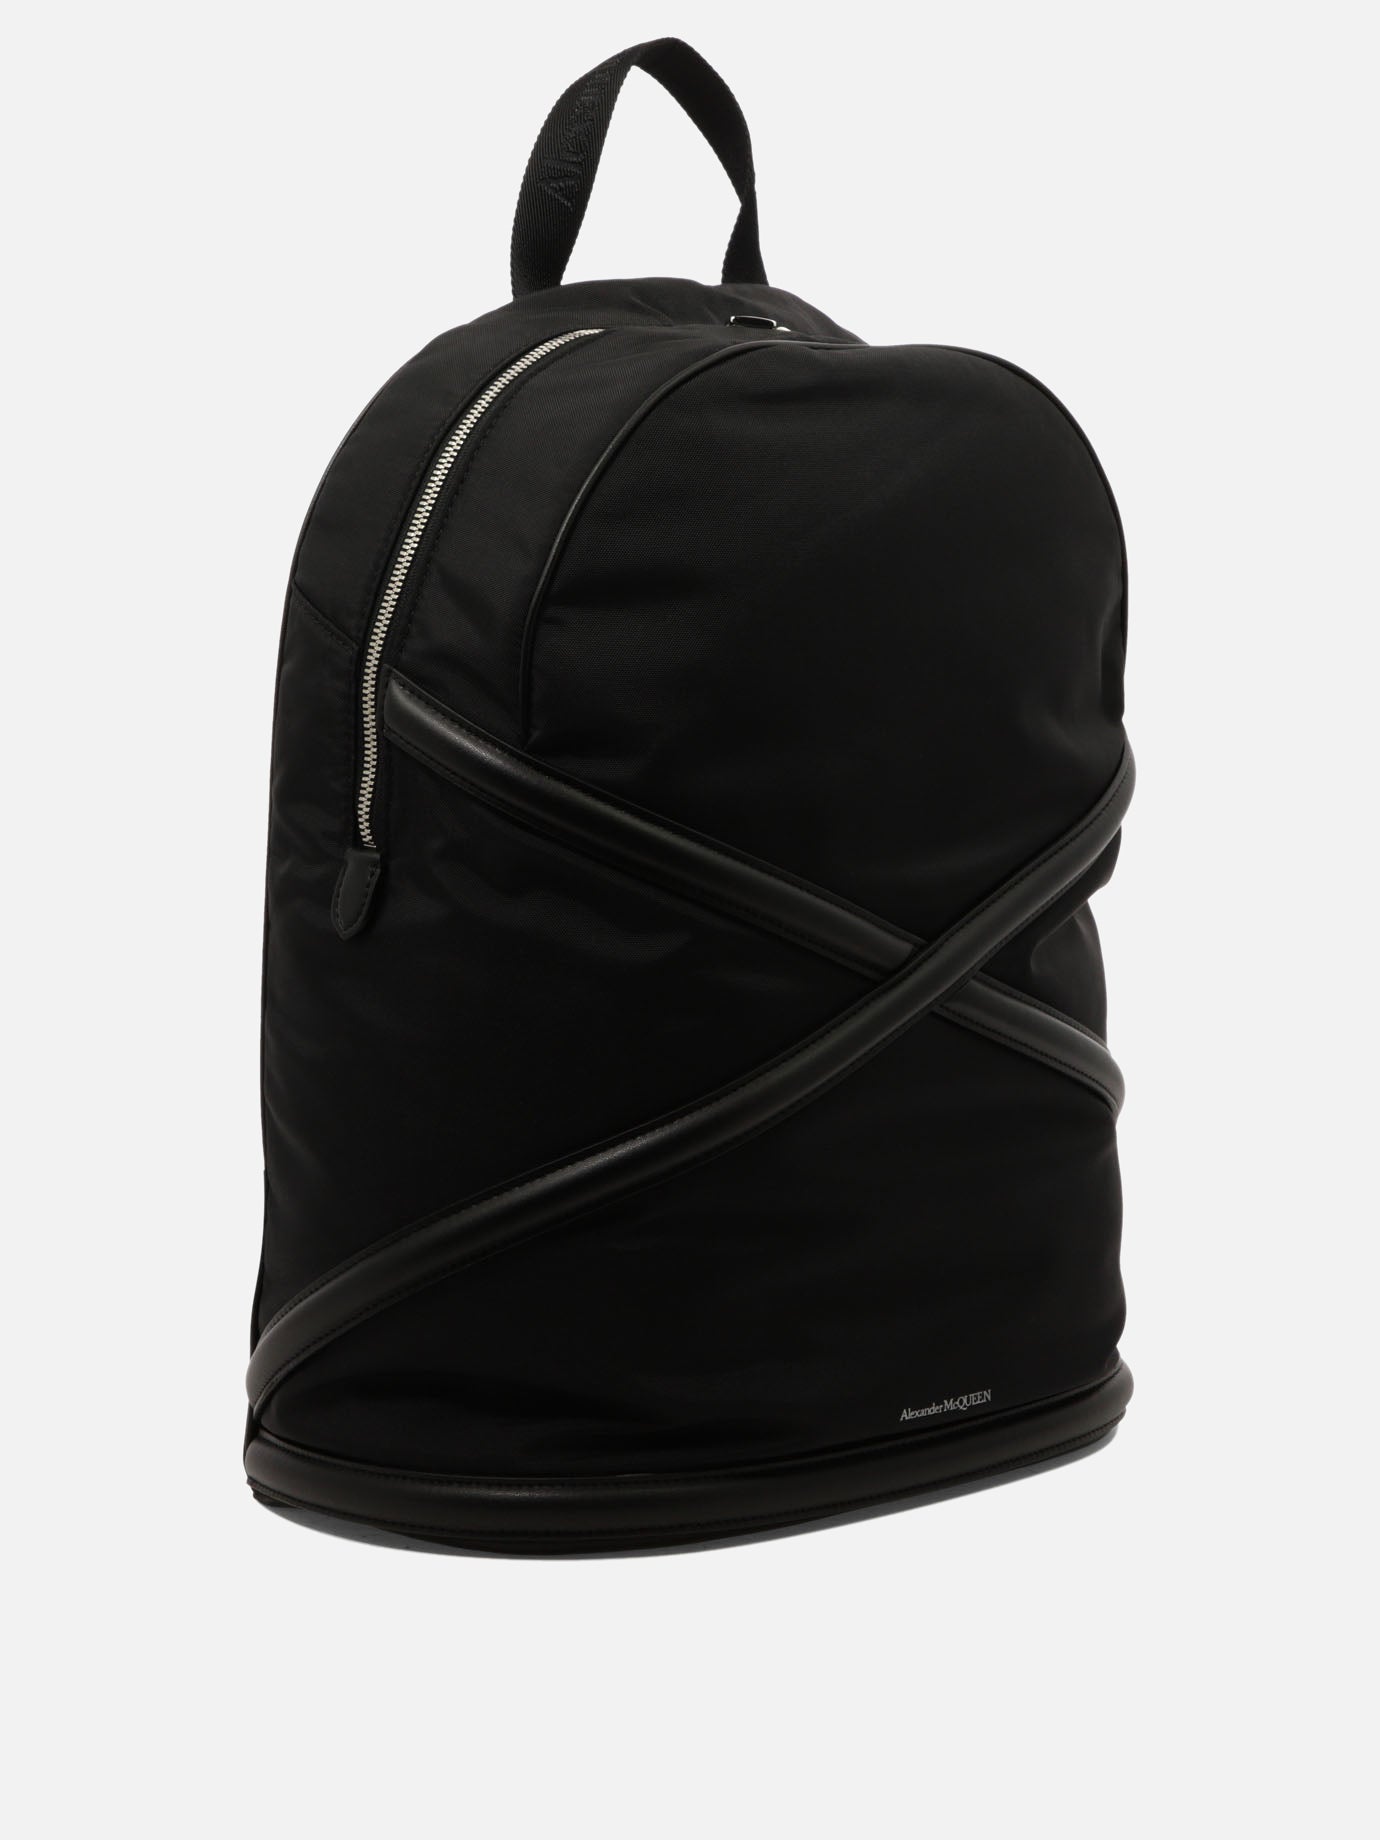 "Harness" backpack